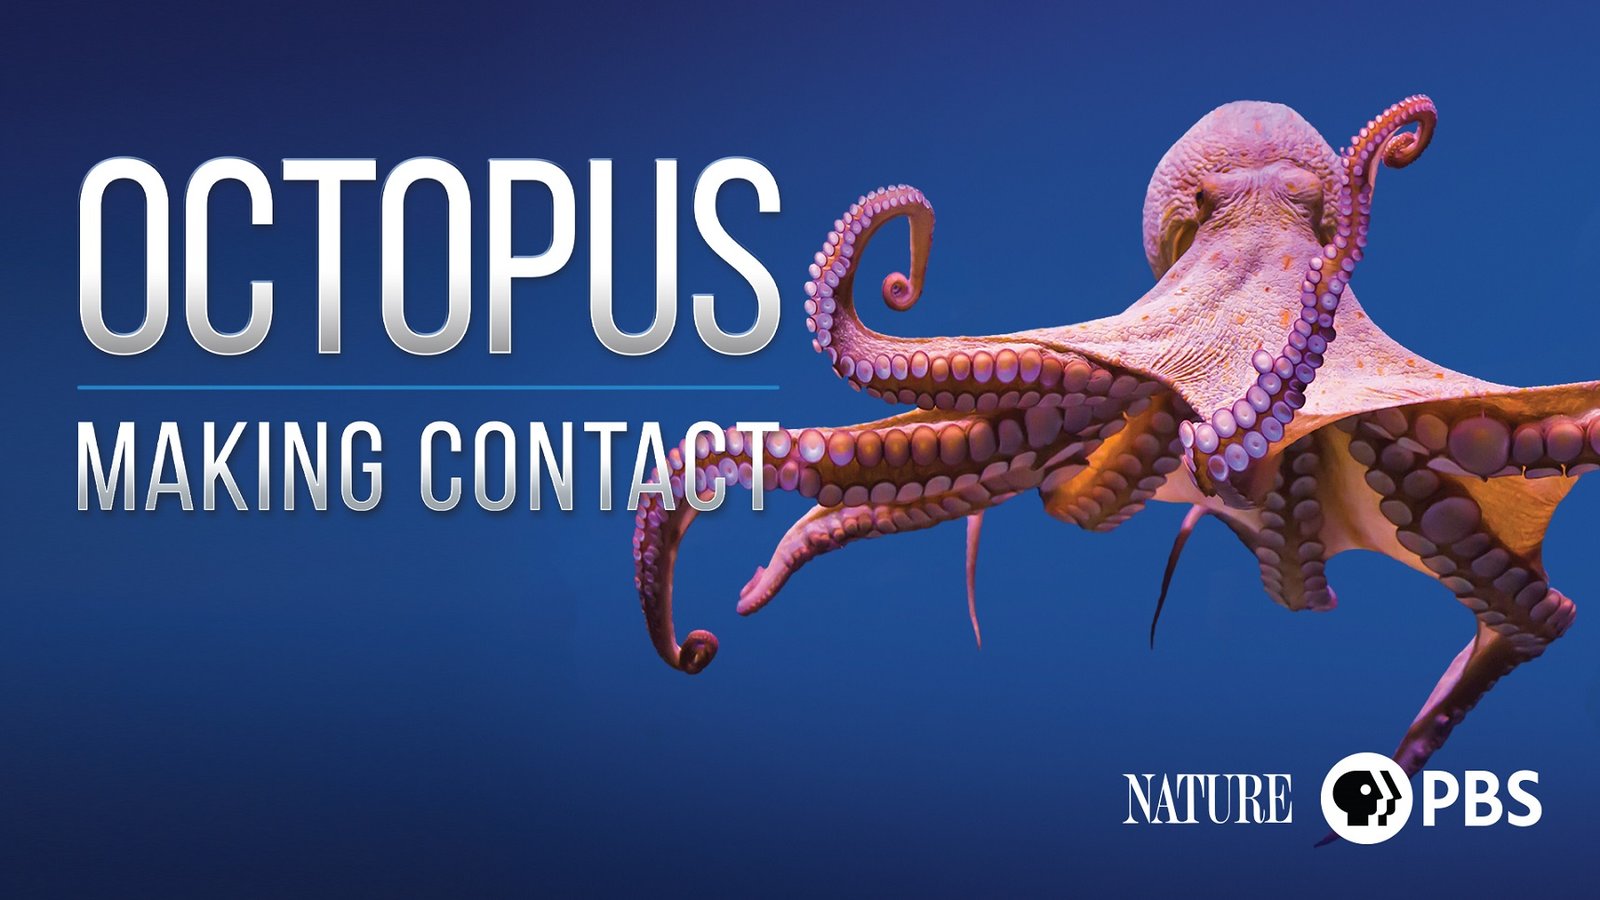 Nature: Octopus - Making Contact